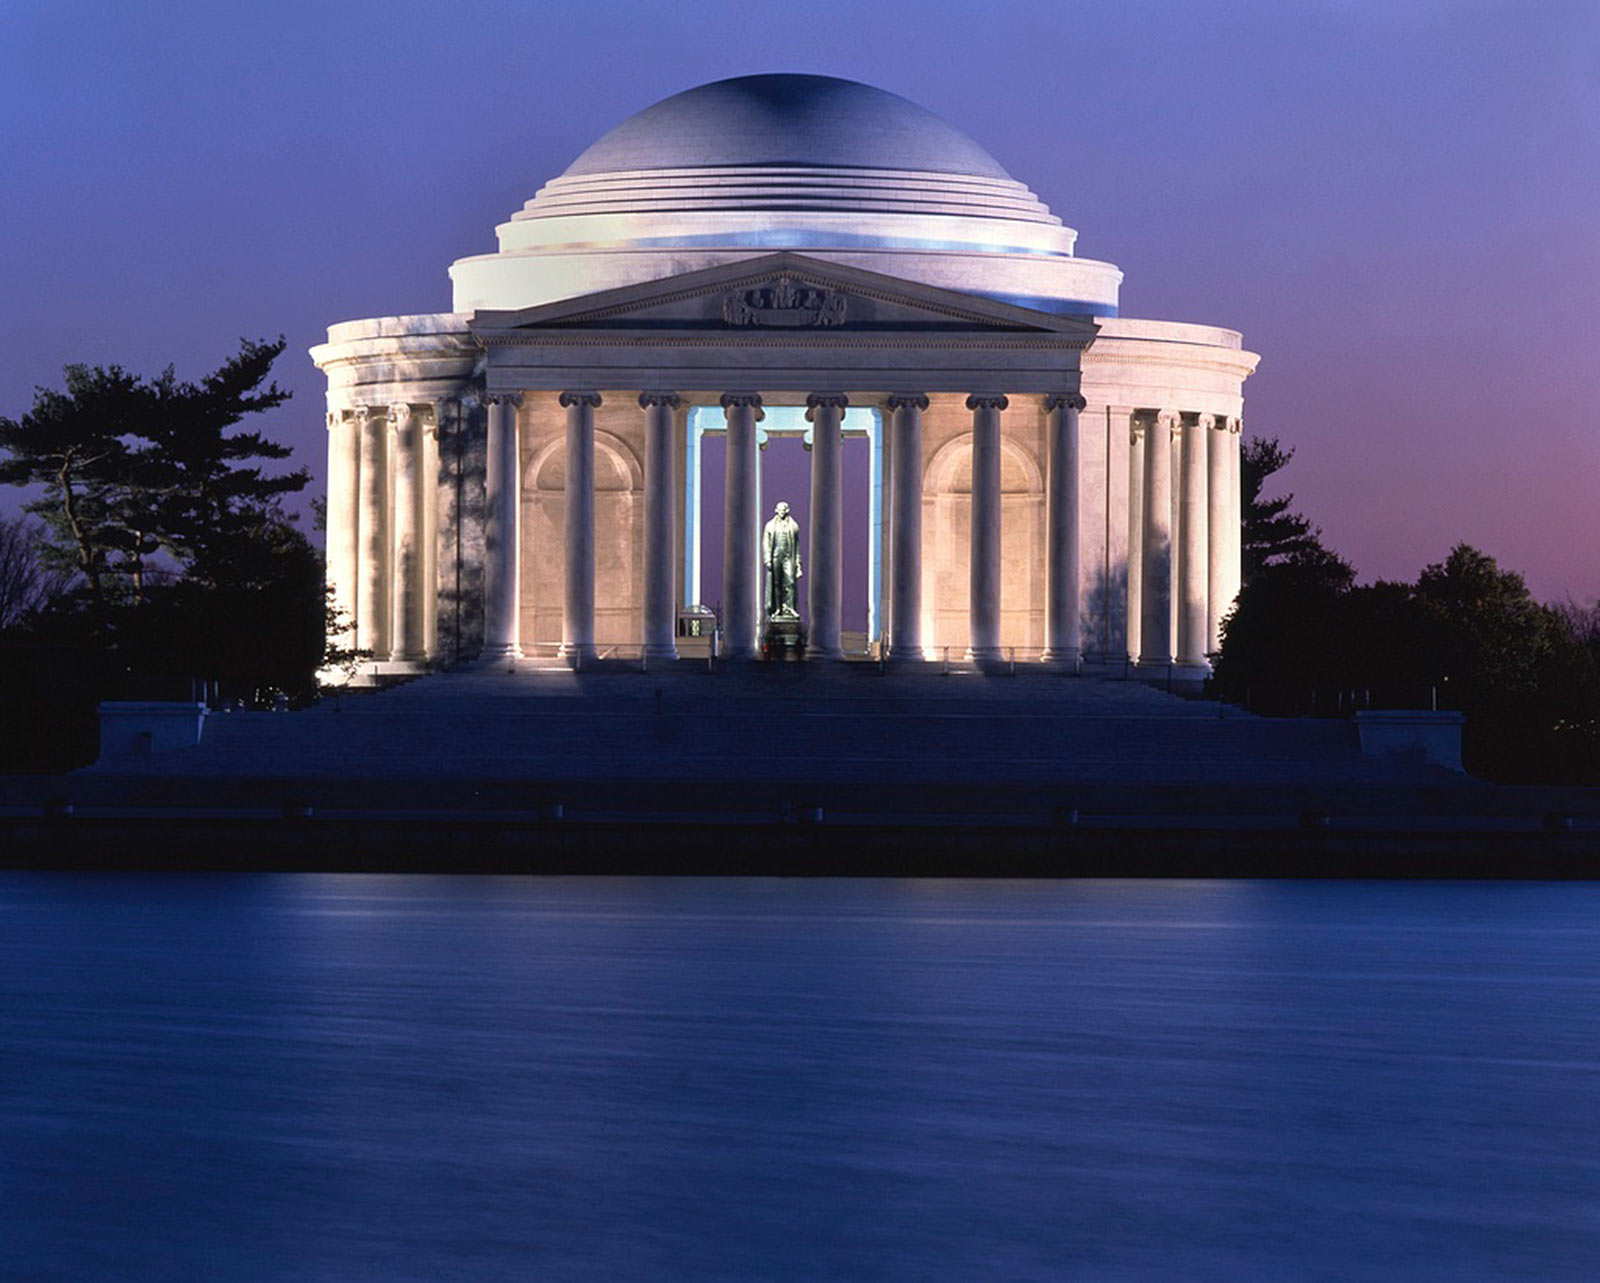 Jefferson Memorial Lit Up at Night